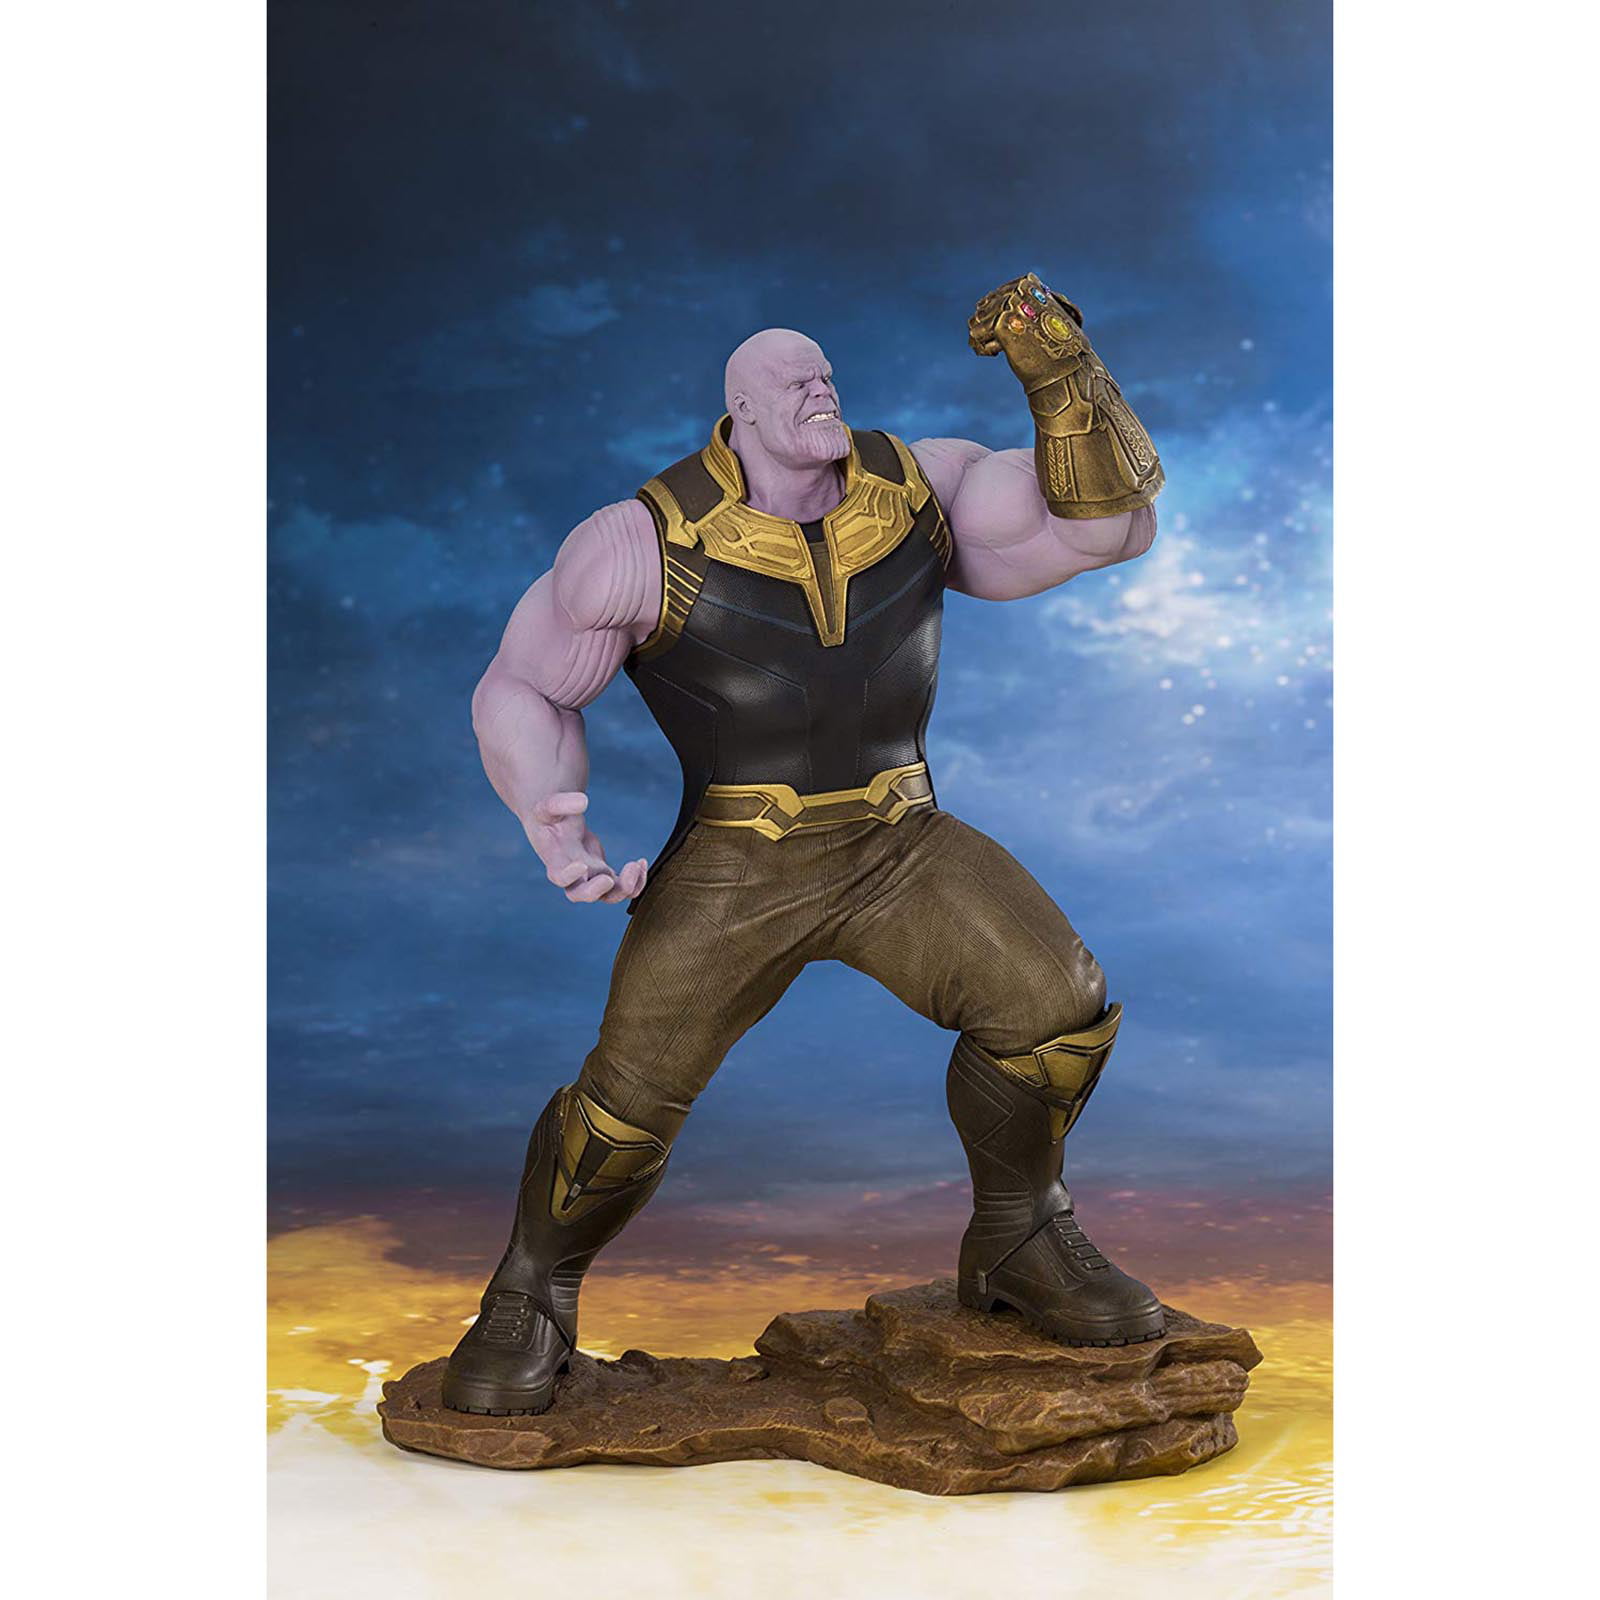 KOTOBUKIYA Infinity War Thanos ARTFX Figure Figures Mk270 for sale online 